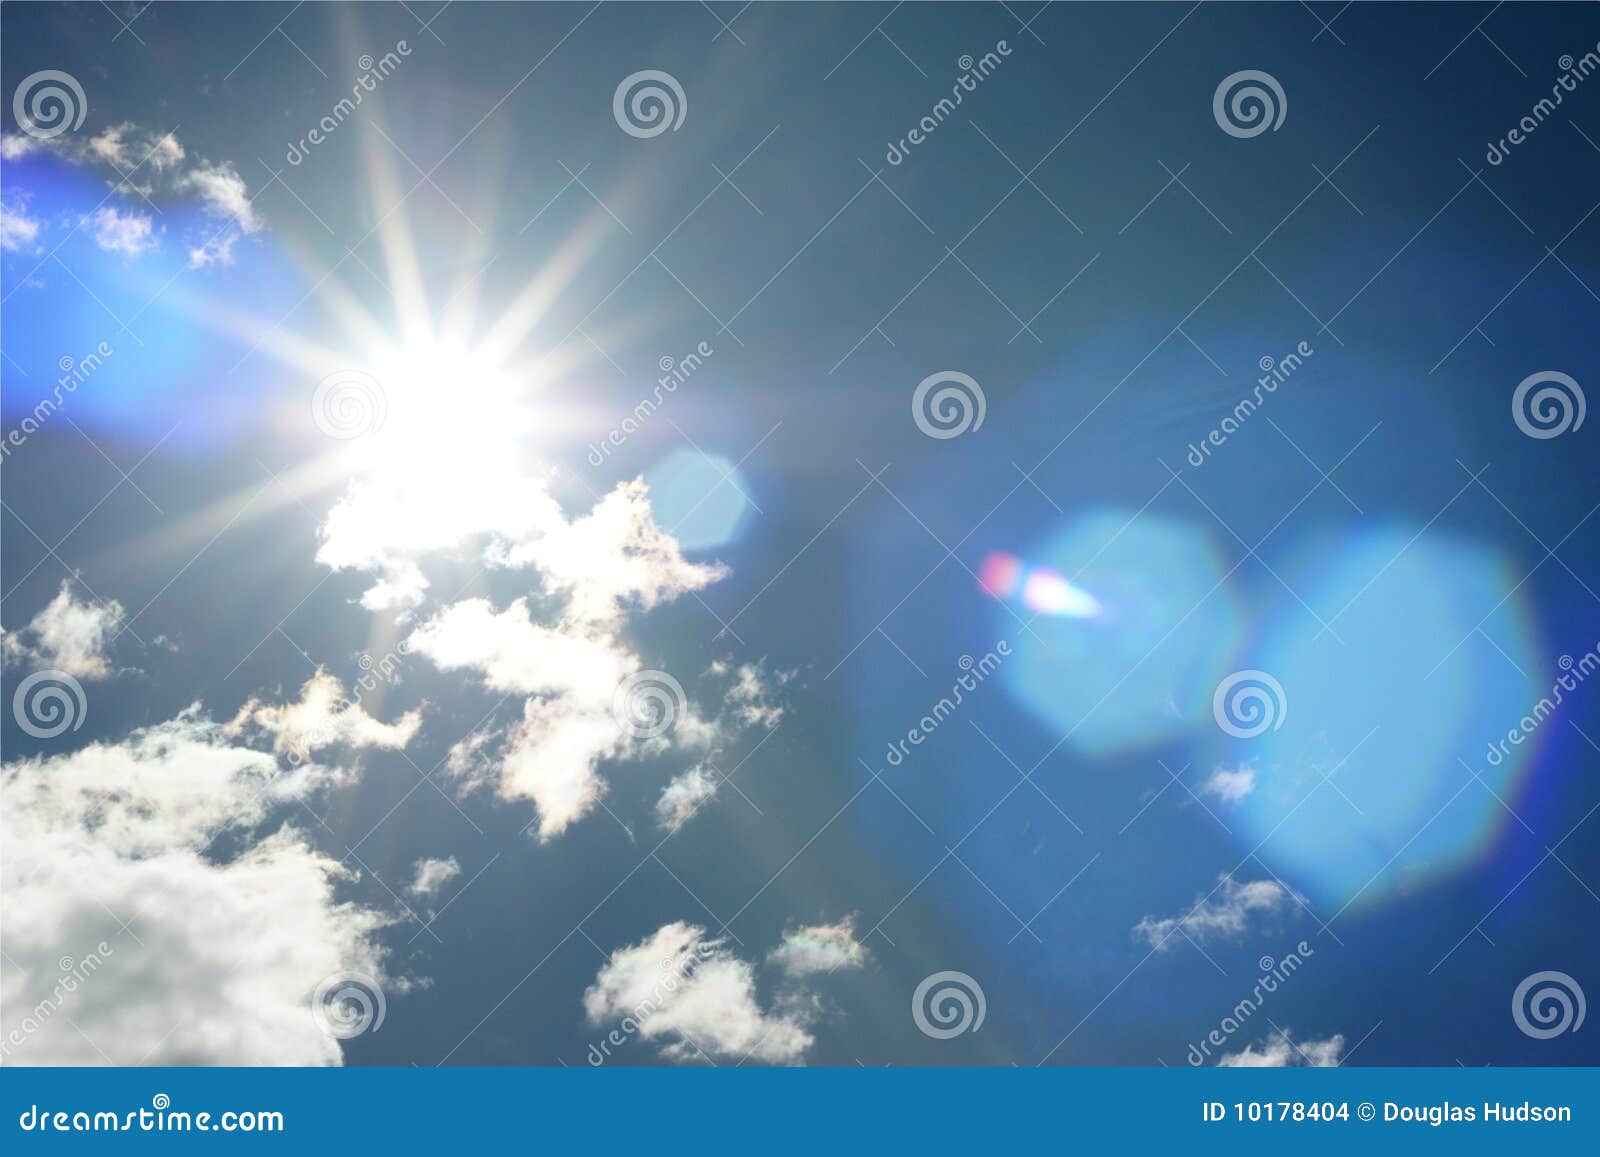 rays of sunshine on a blue sky